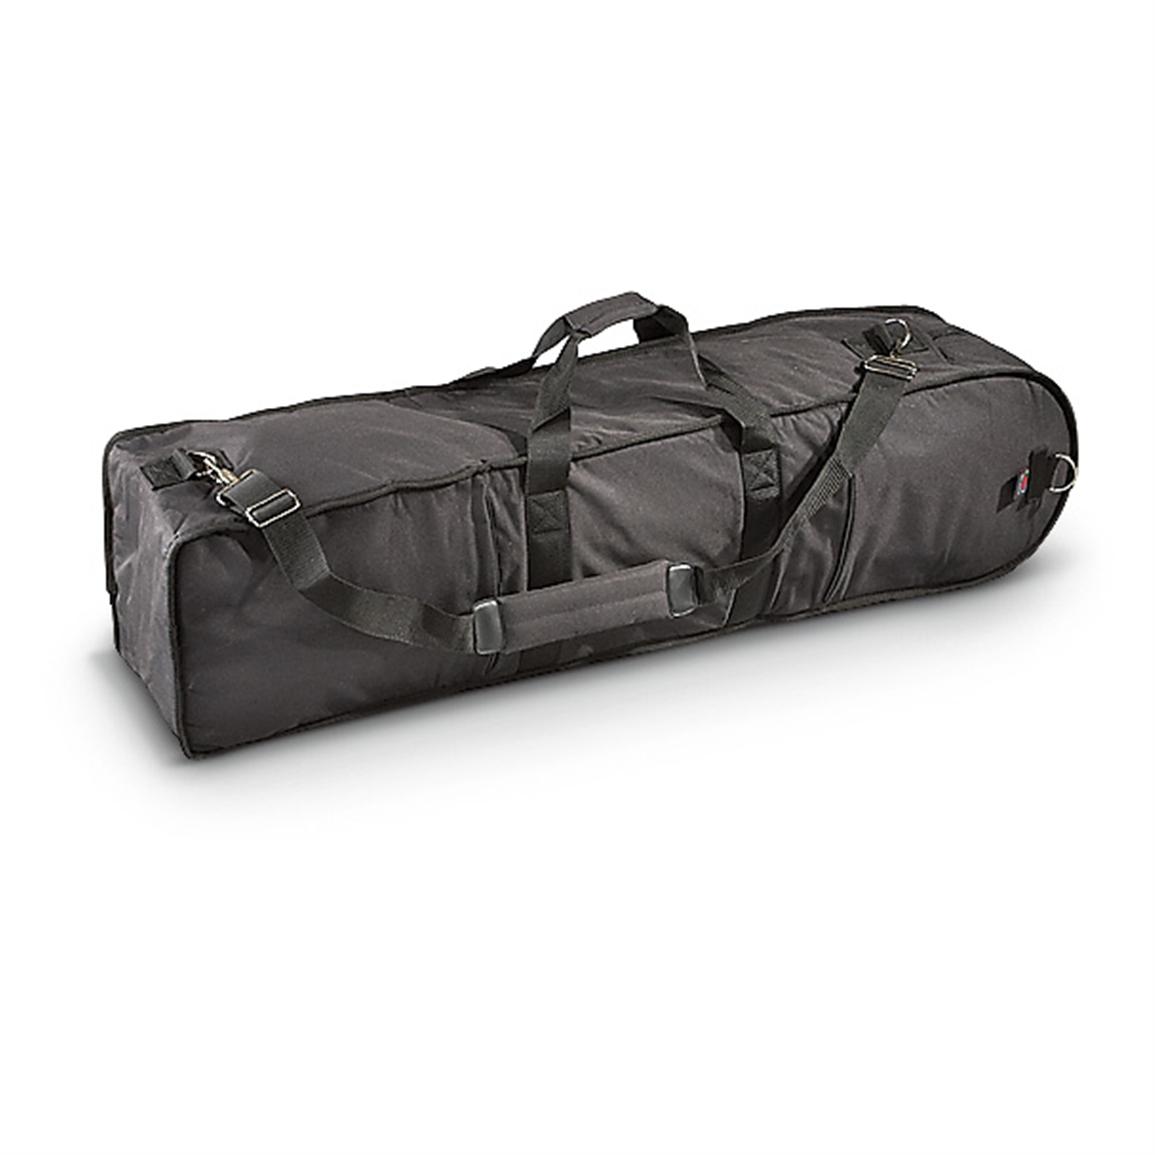 SKB® Padded Golf Travel Bag, Black - 230881, at Sportsman's Guide